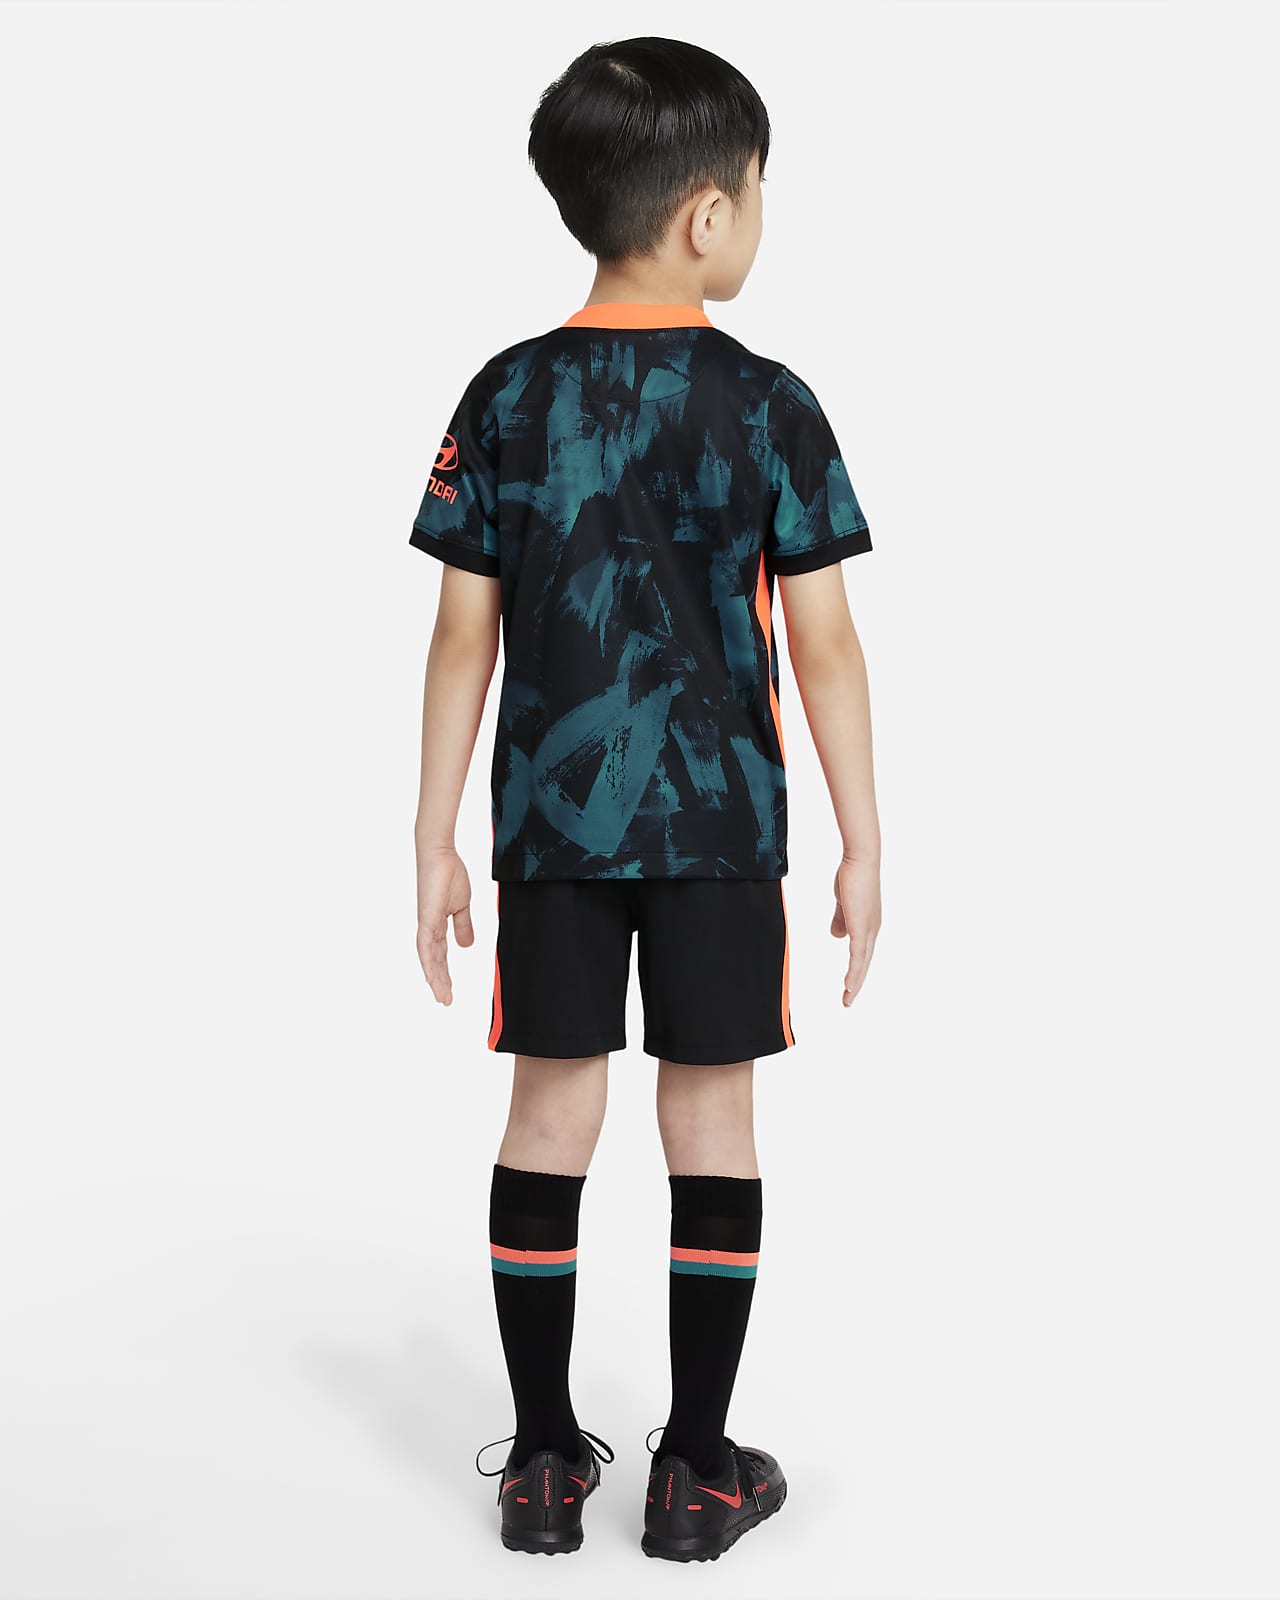 Chelsea FC 2021/22 Nike Home Kit - FOOTBALL FASHION